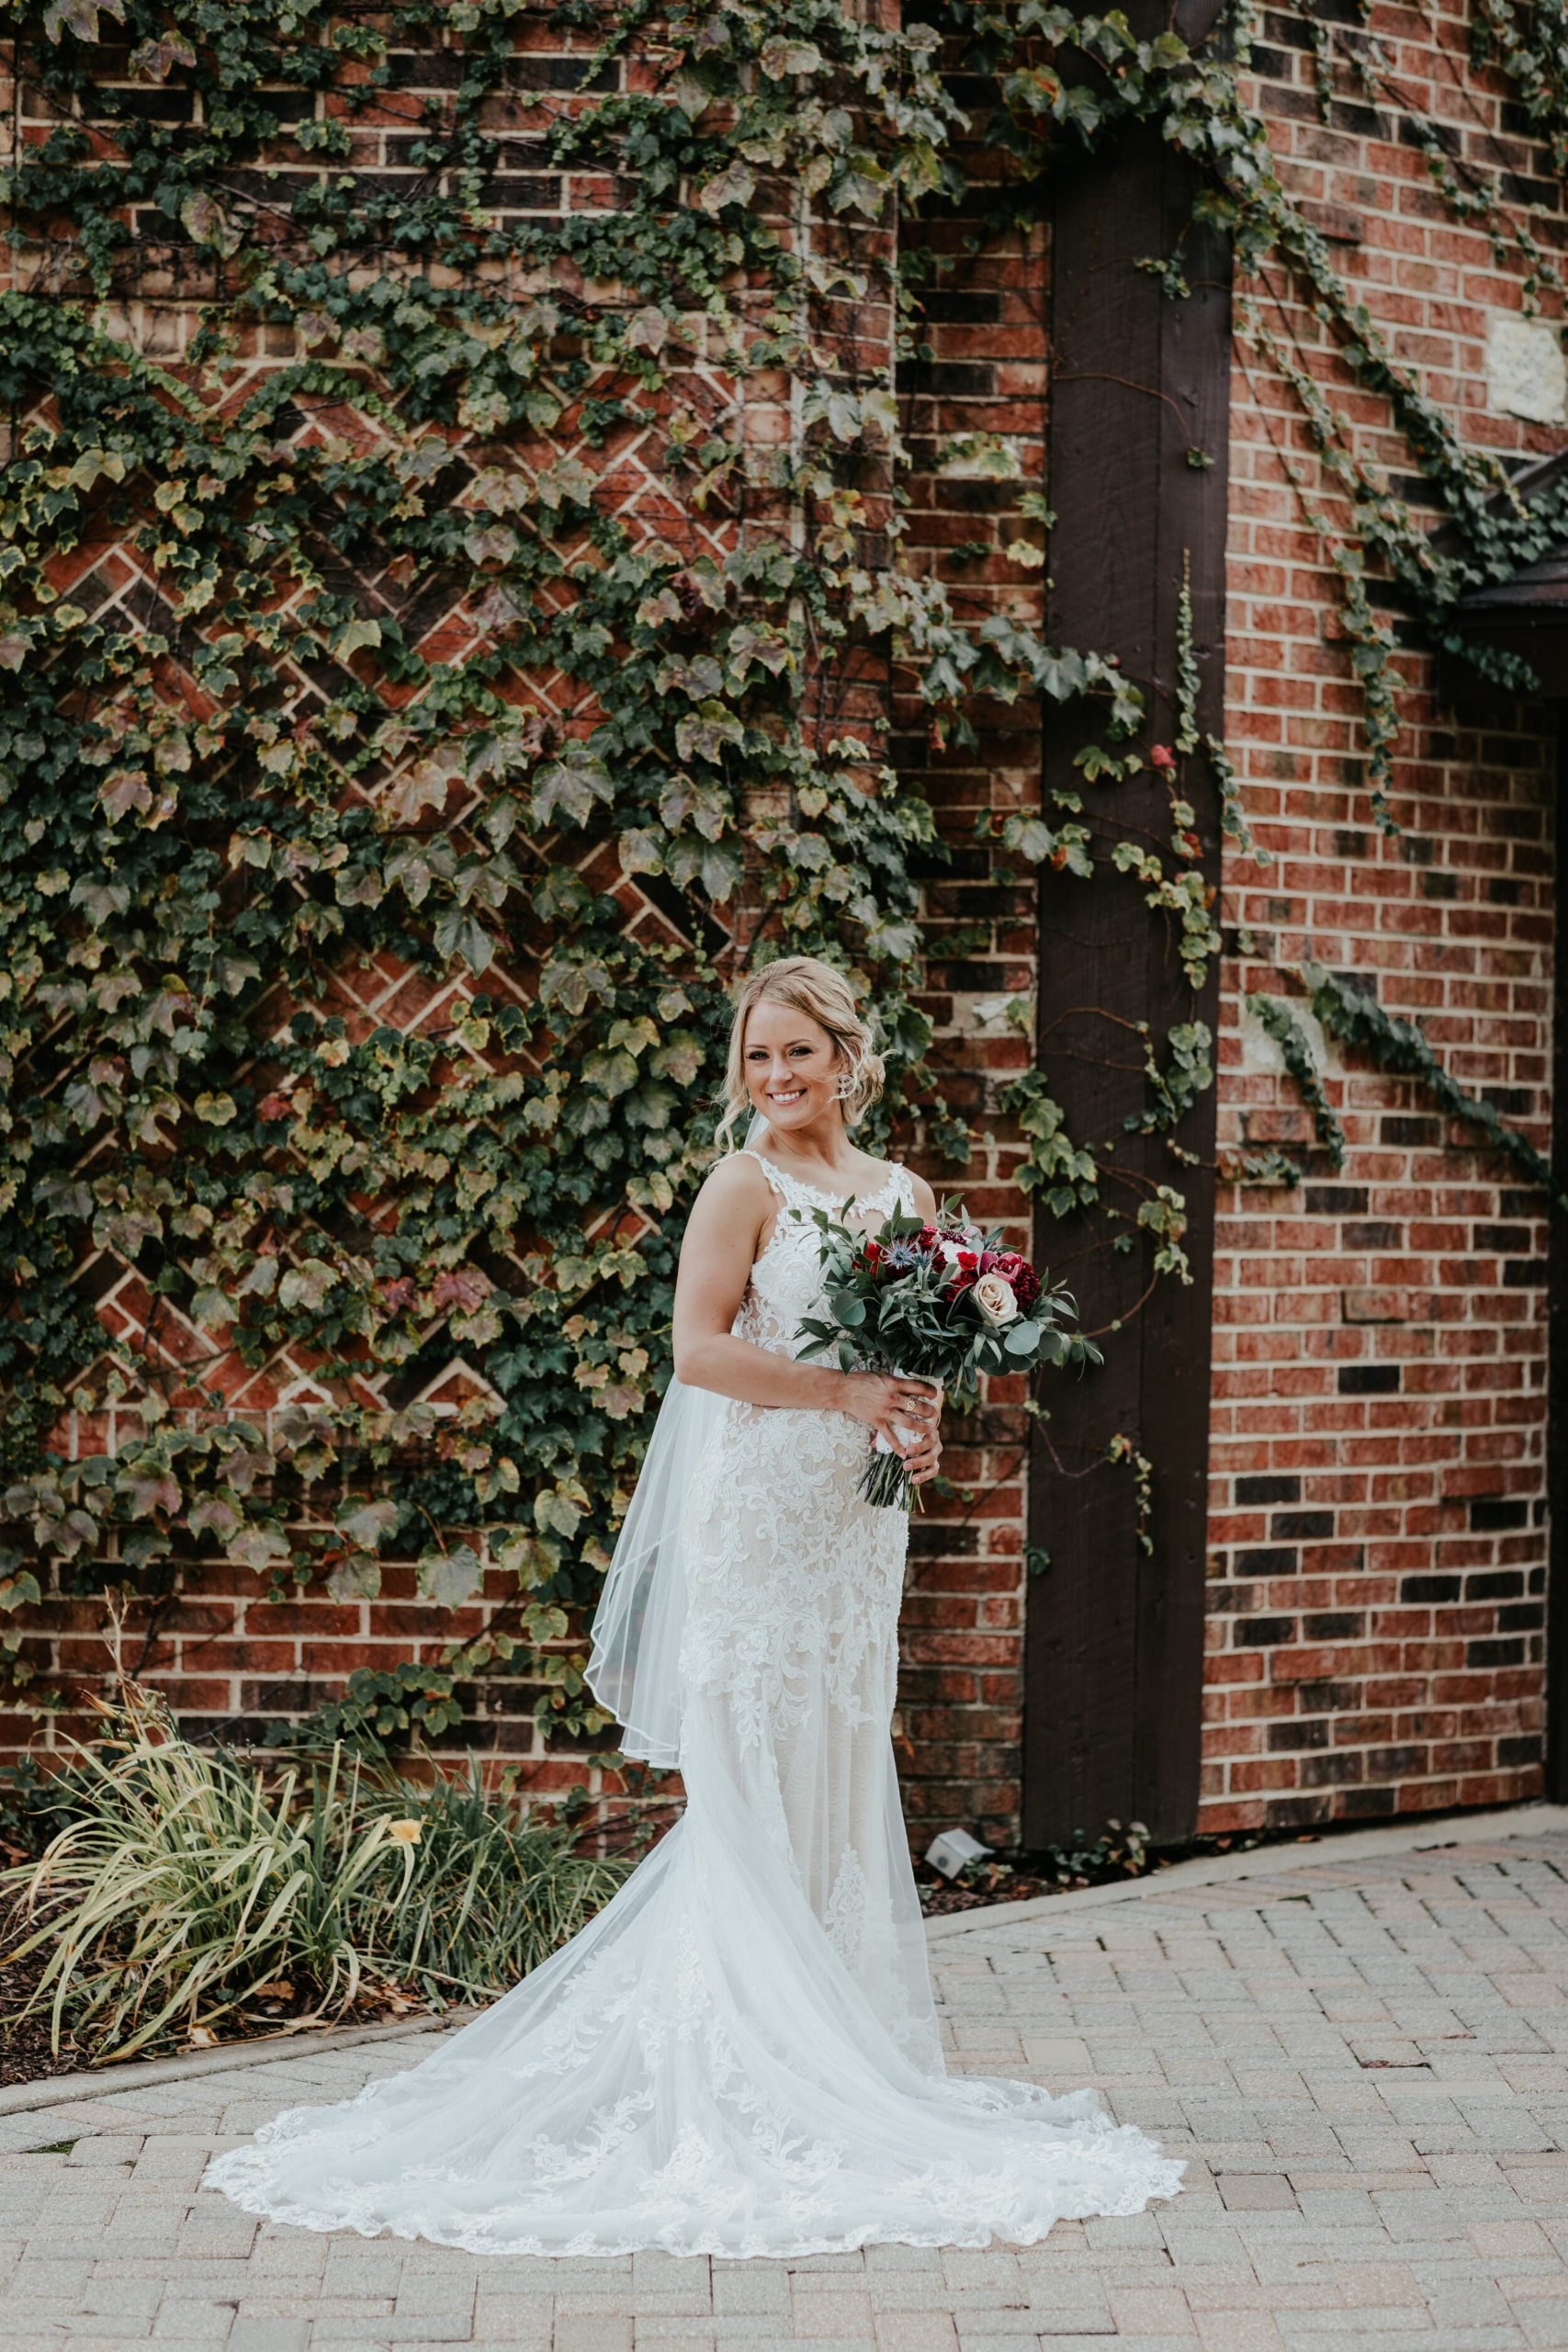 Bride + Groom Danielle Schury Photography Copyright 2019 (10).JPG